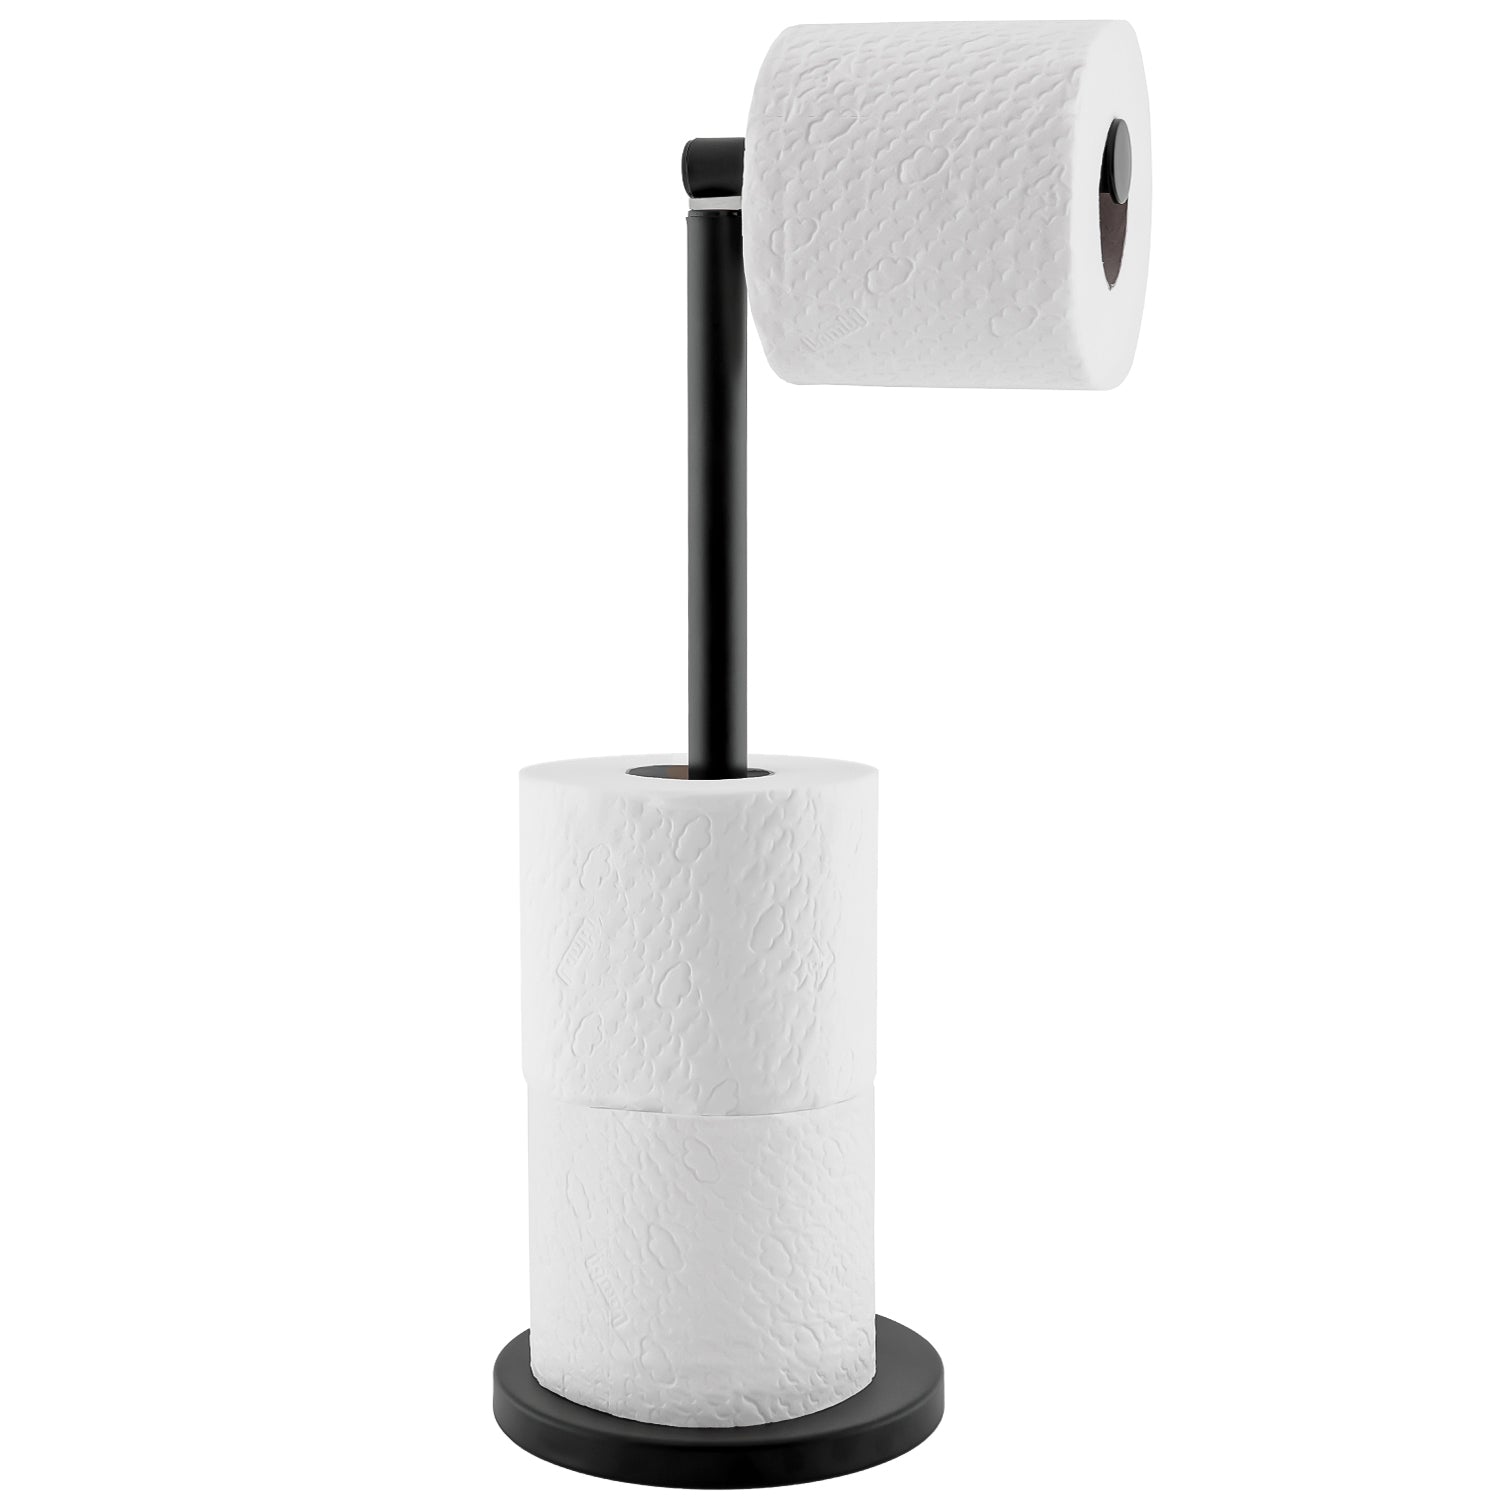 Tatkraft Nora - Toilet Paper Stand Storage, Toilet Paper Roll Holder, Black